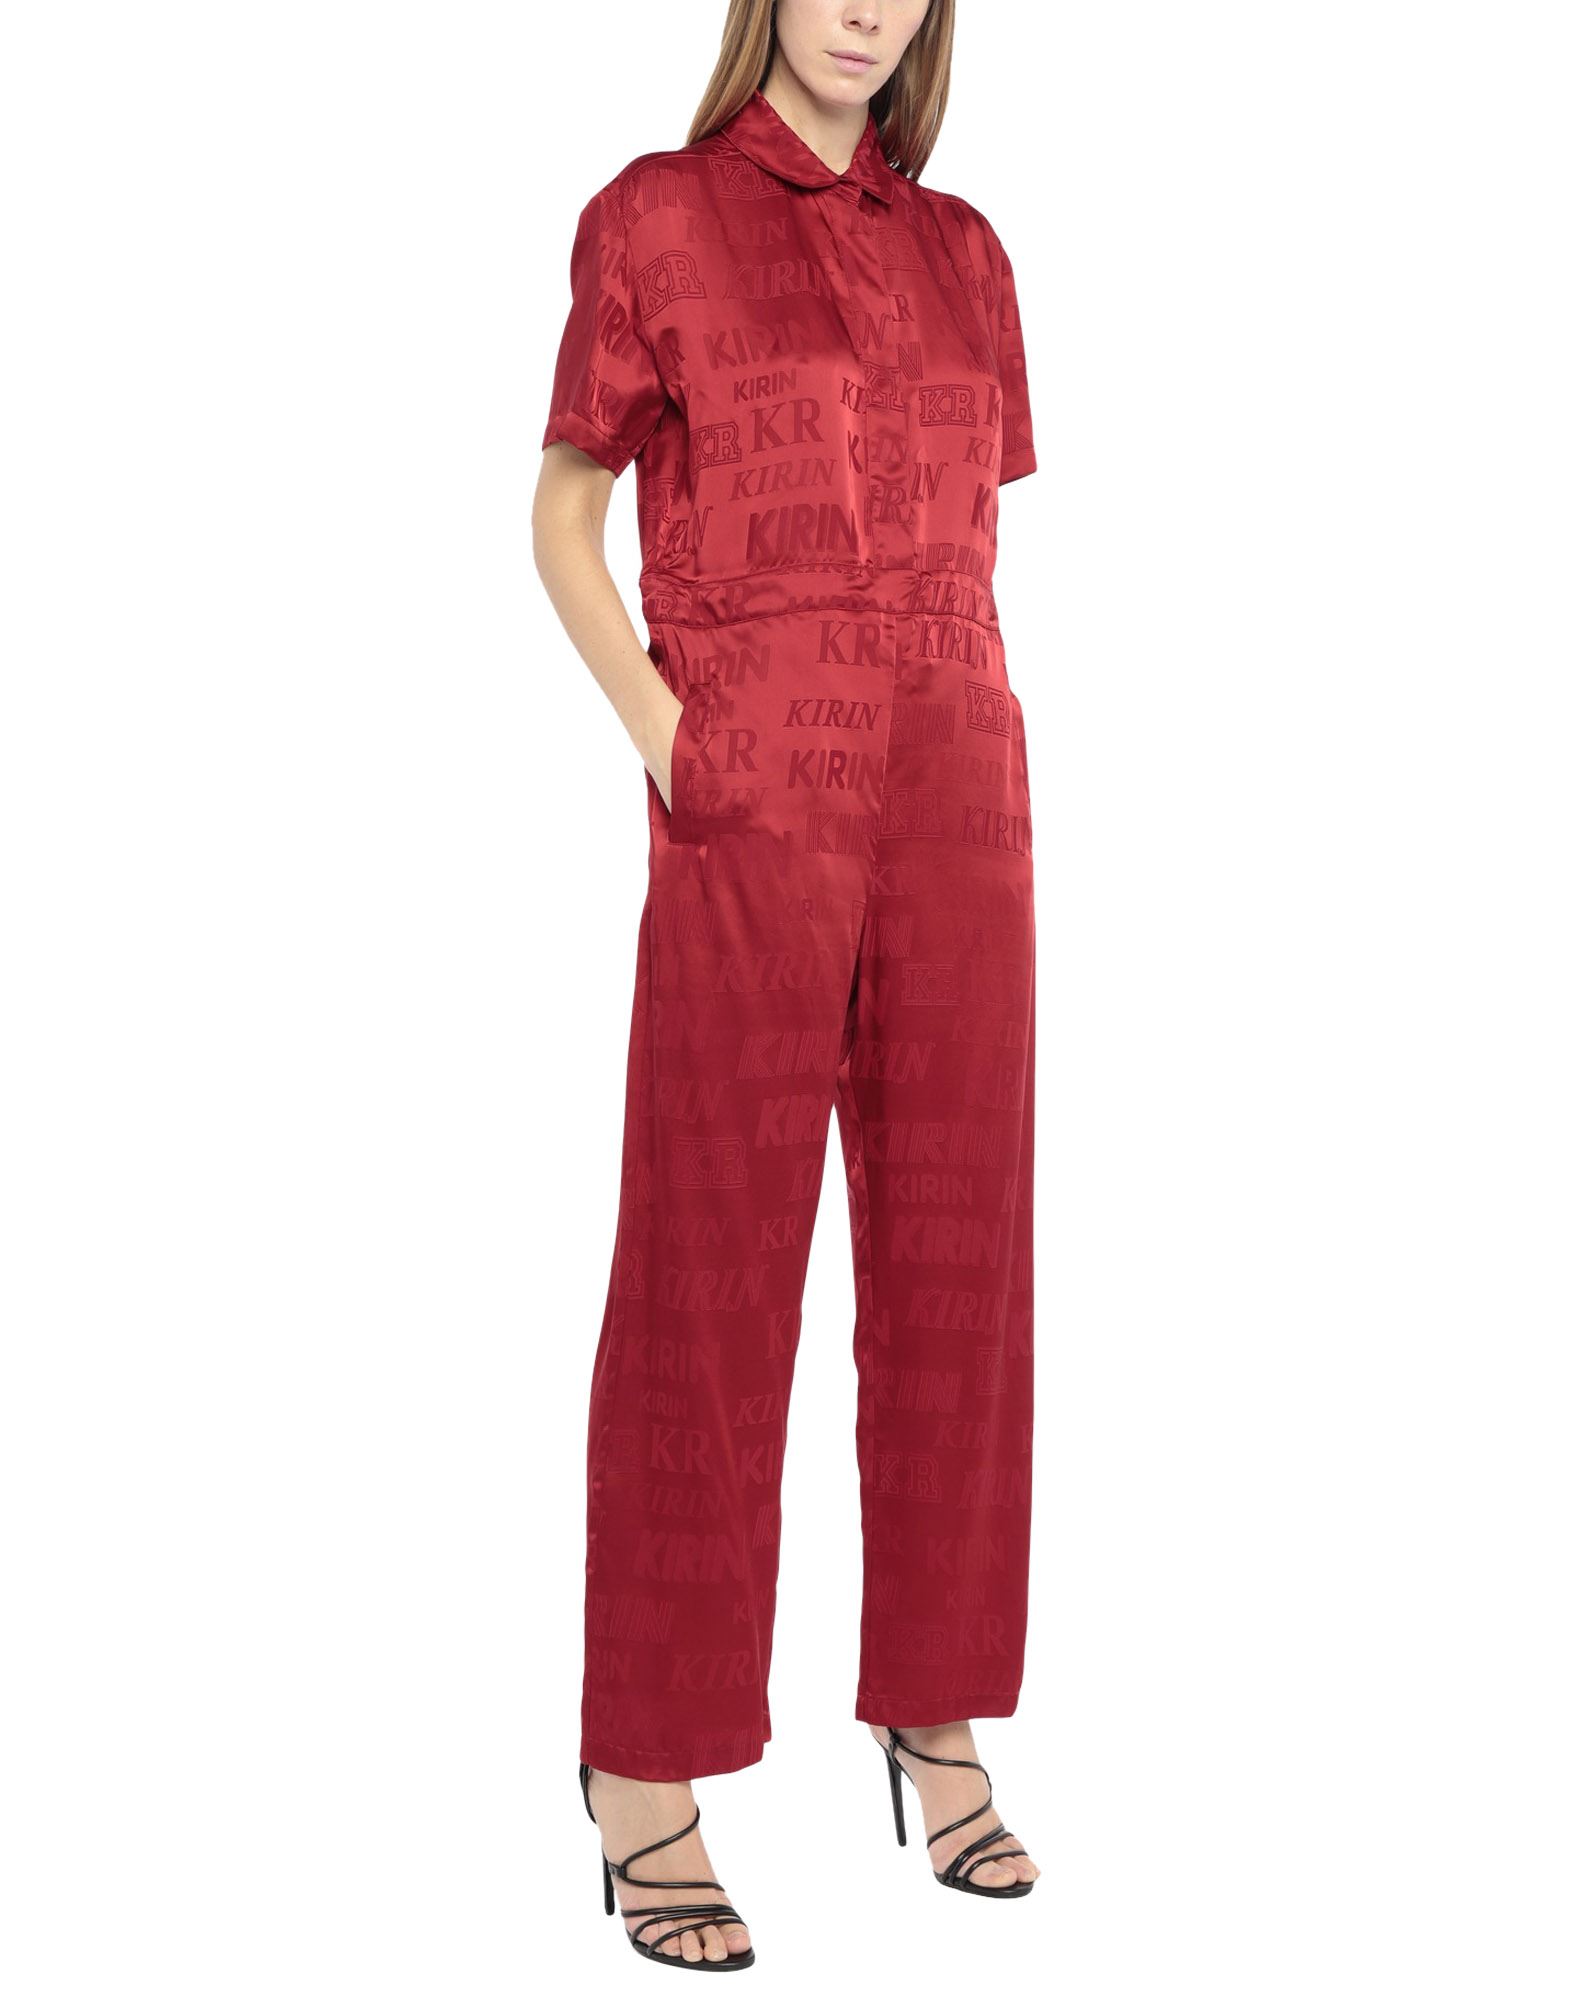 Kirin Peggy Gou Jumpsuits In Red